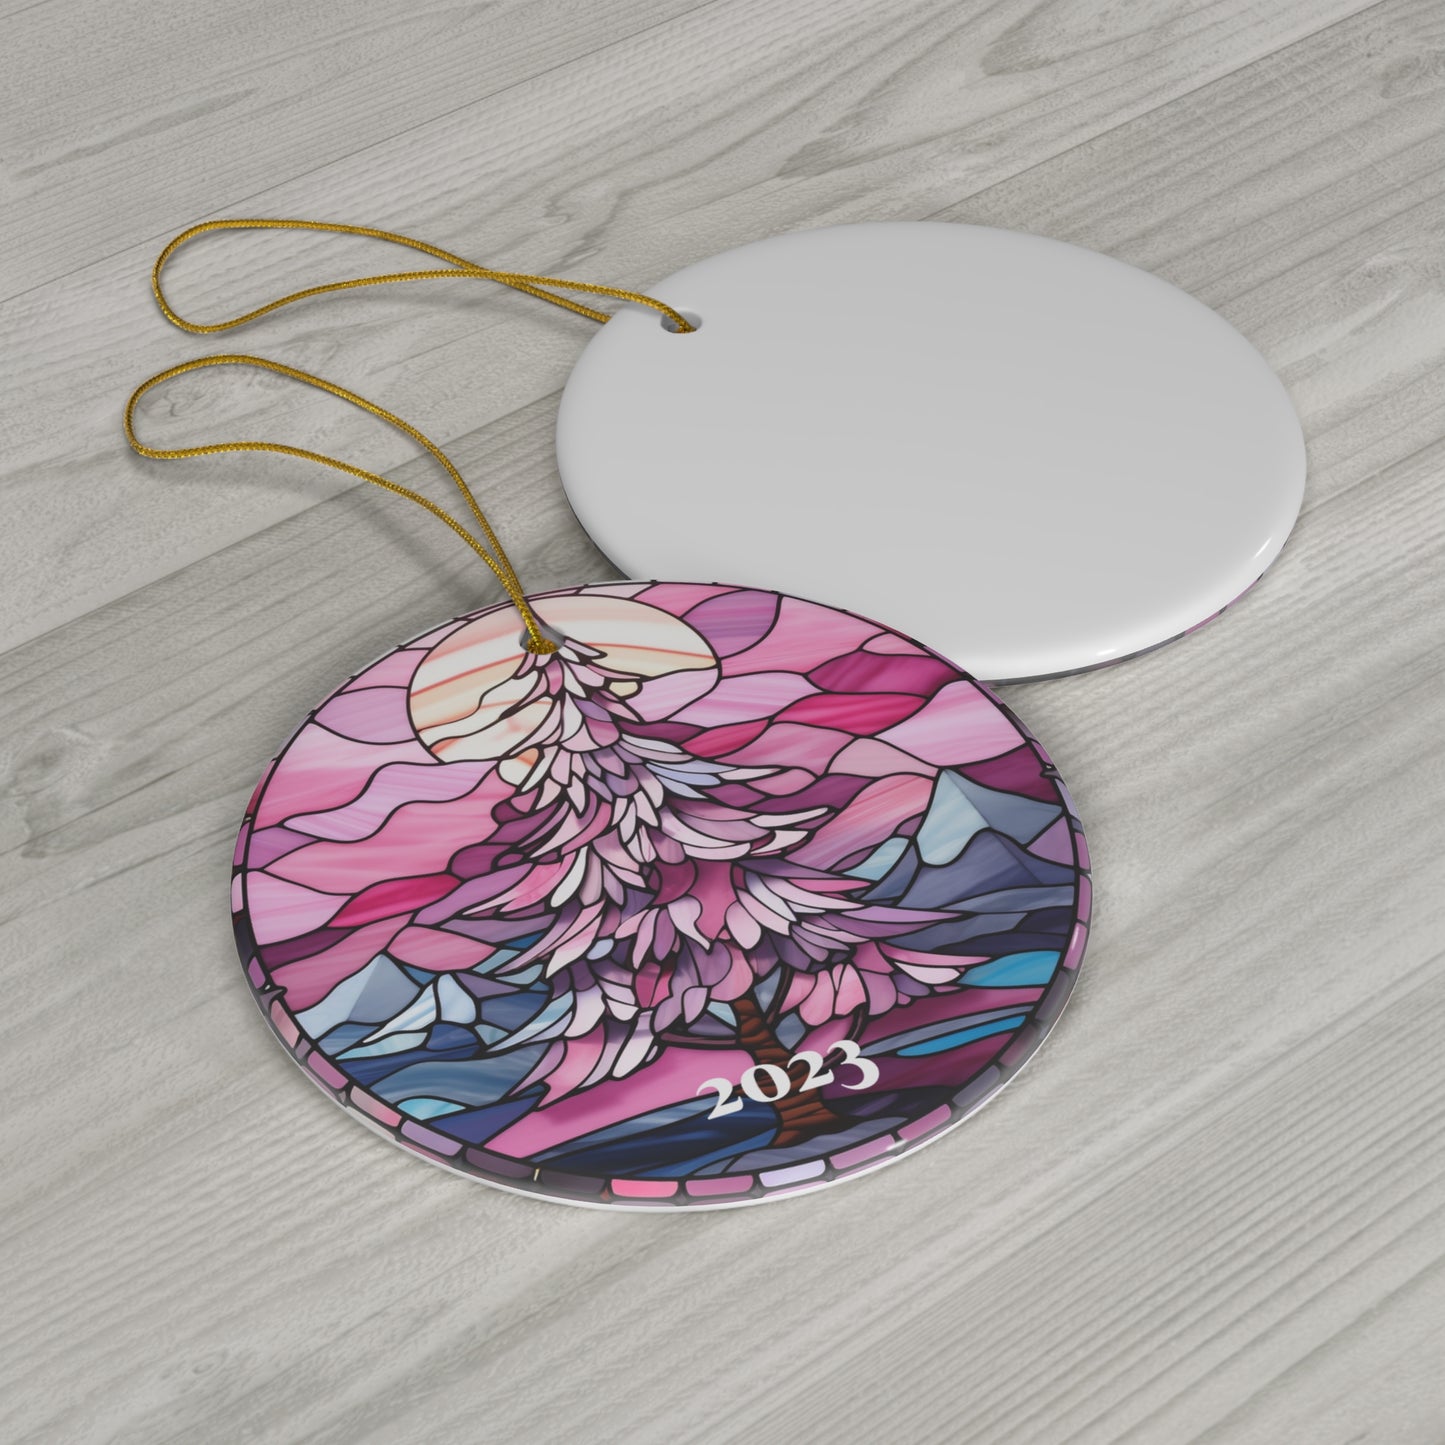 Pink Christmas 2023 Ornament, Printed Stained Glass Tree Decoration Holiday Gift Idea Heirloom Keepsake Round Ceramic Xmas Tree Starcove Fashion